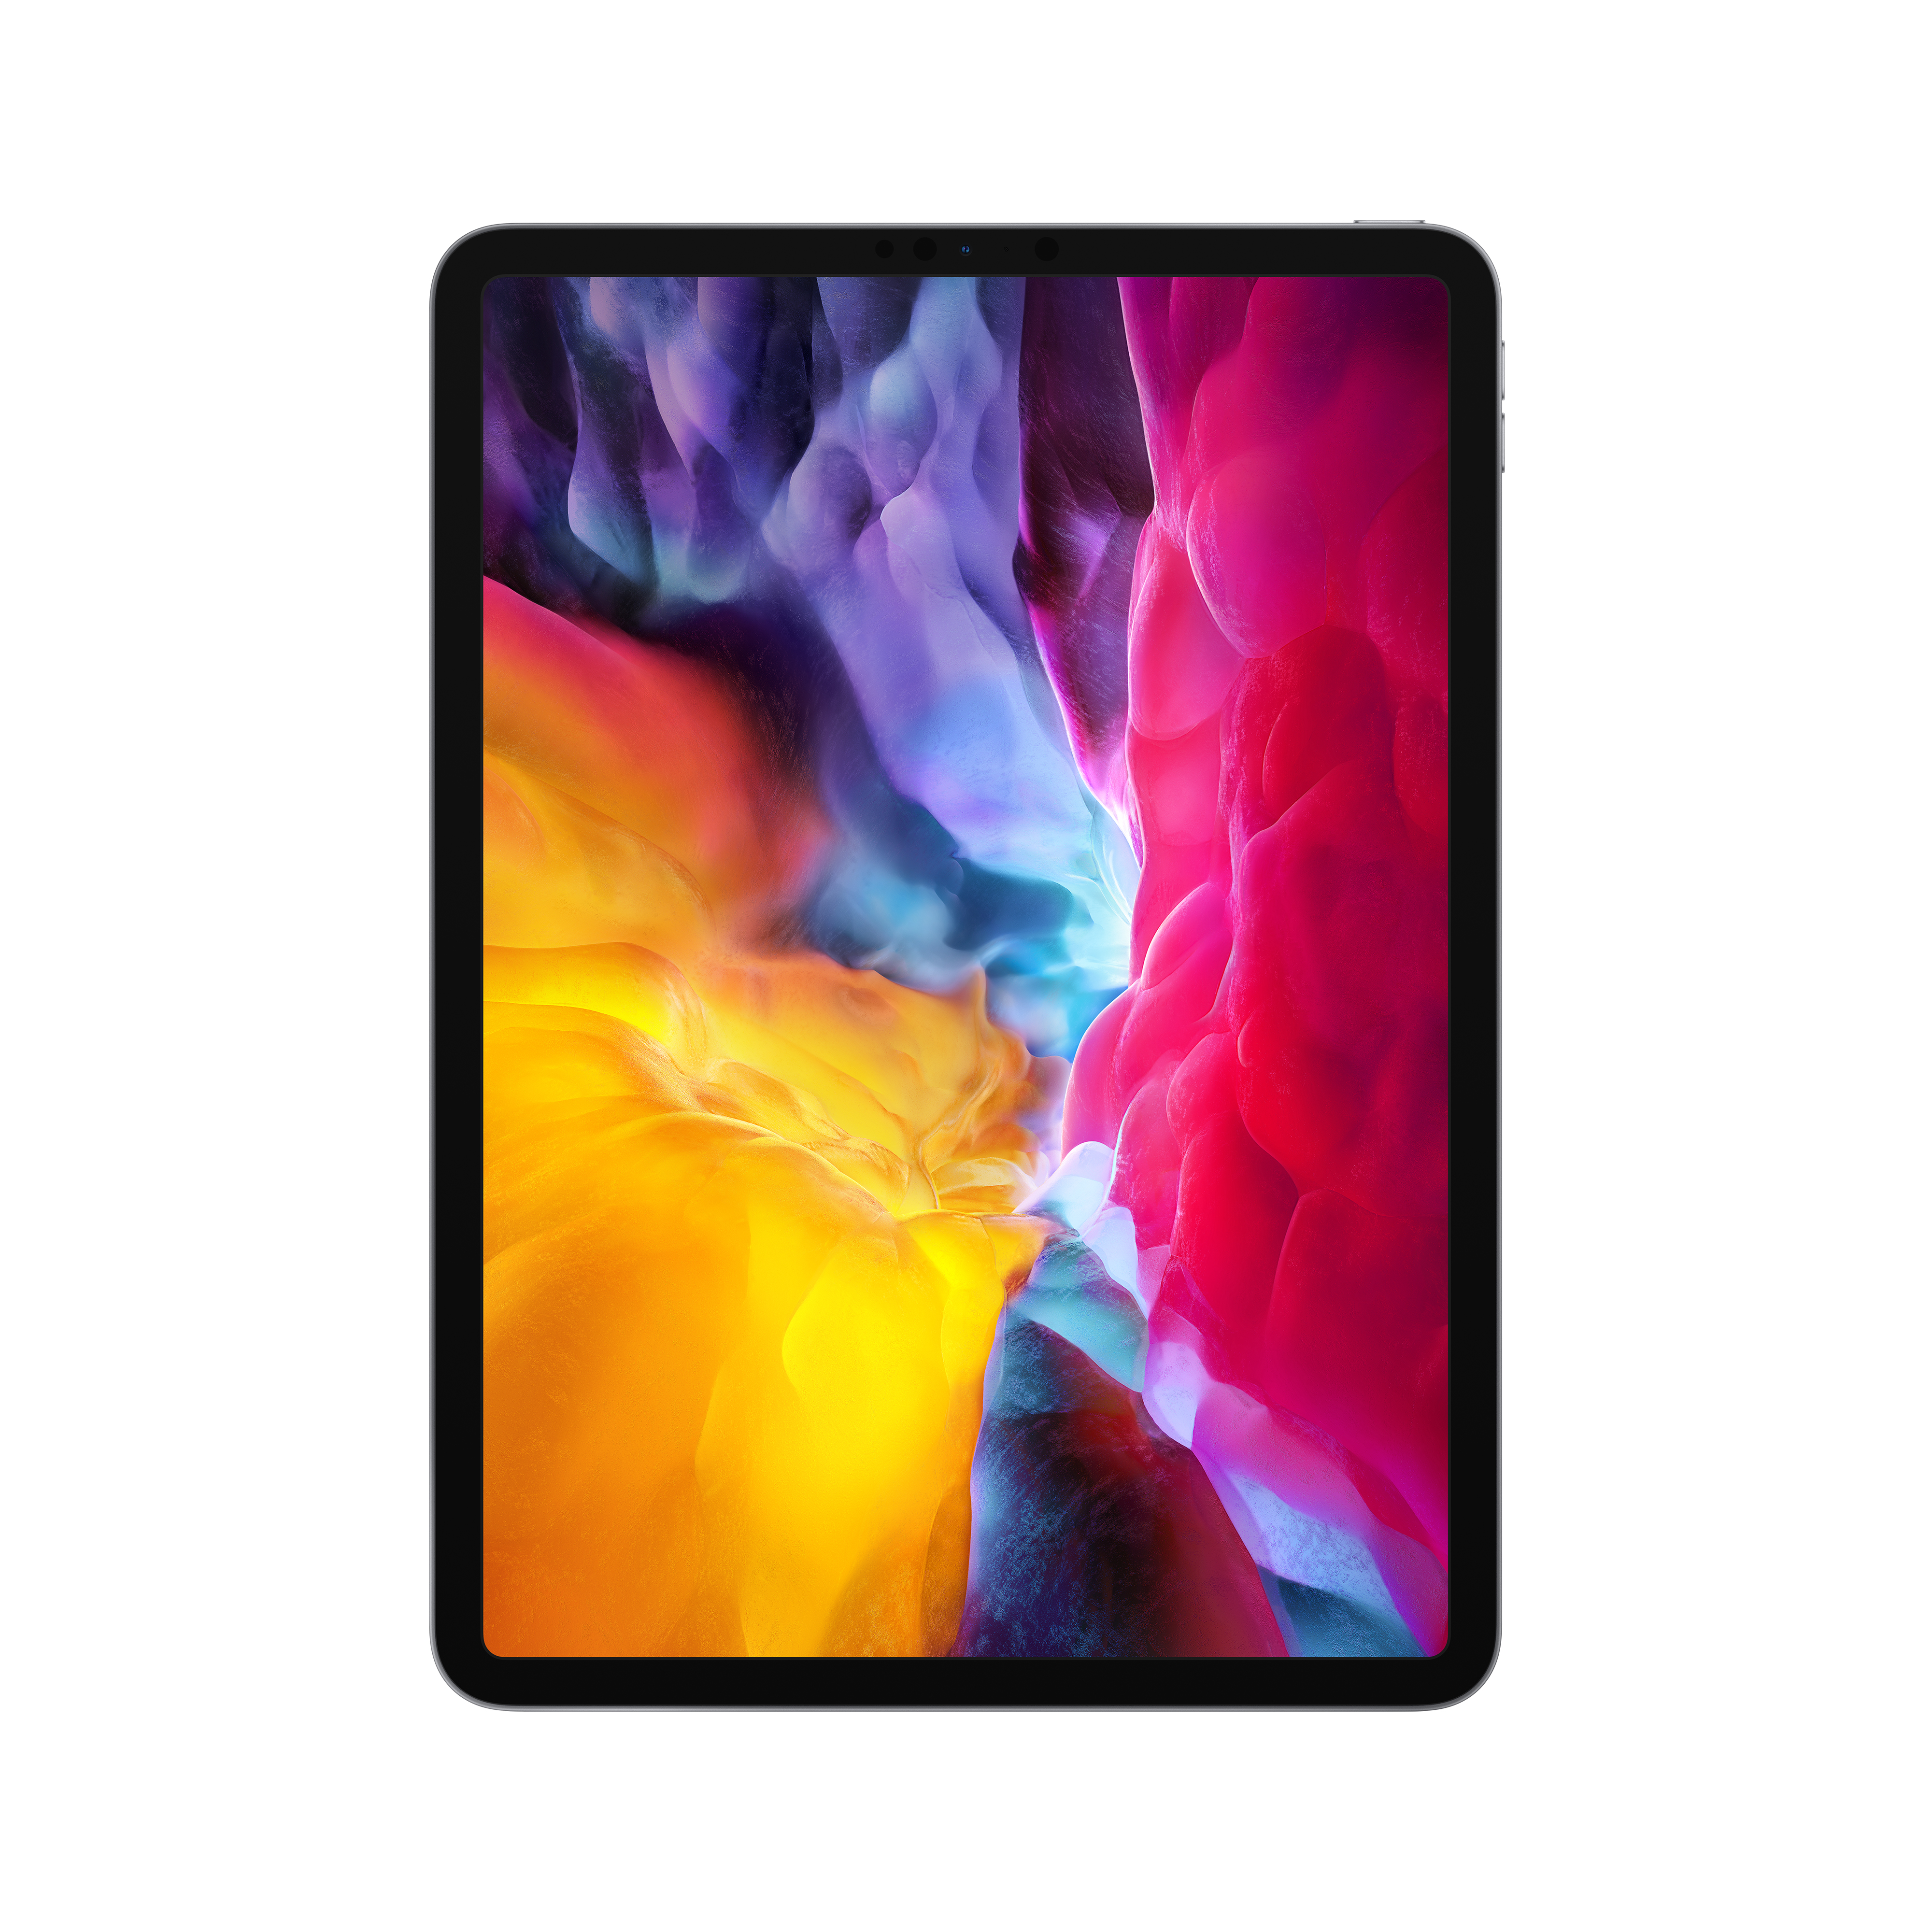 Apple 11-inch iPad Pro (2020) Wi-Fi 128GB - Space Gray - image 3 of 10